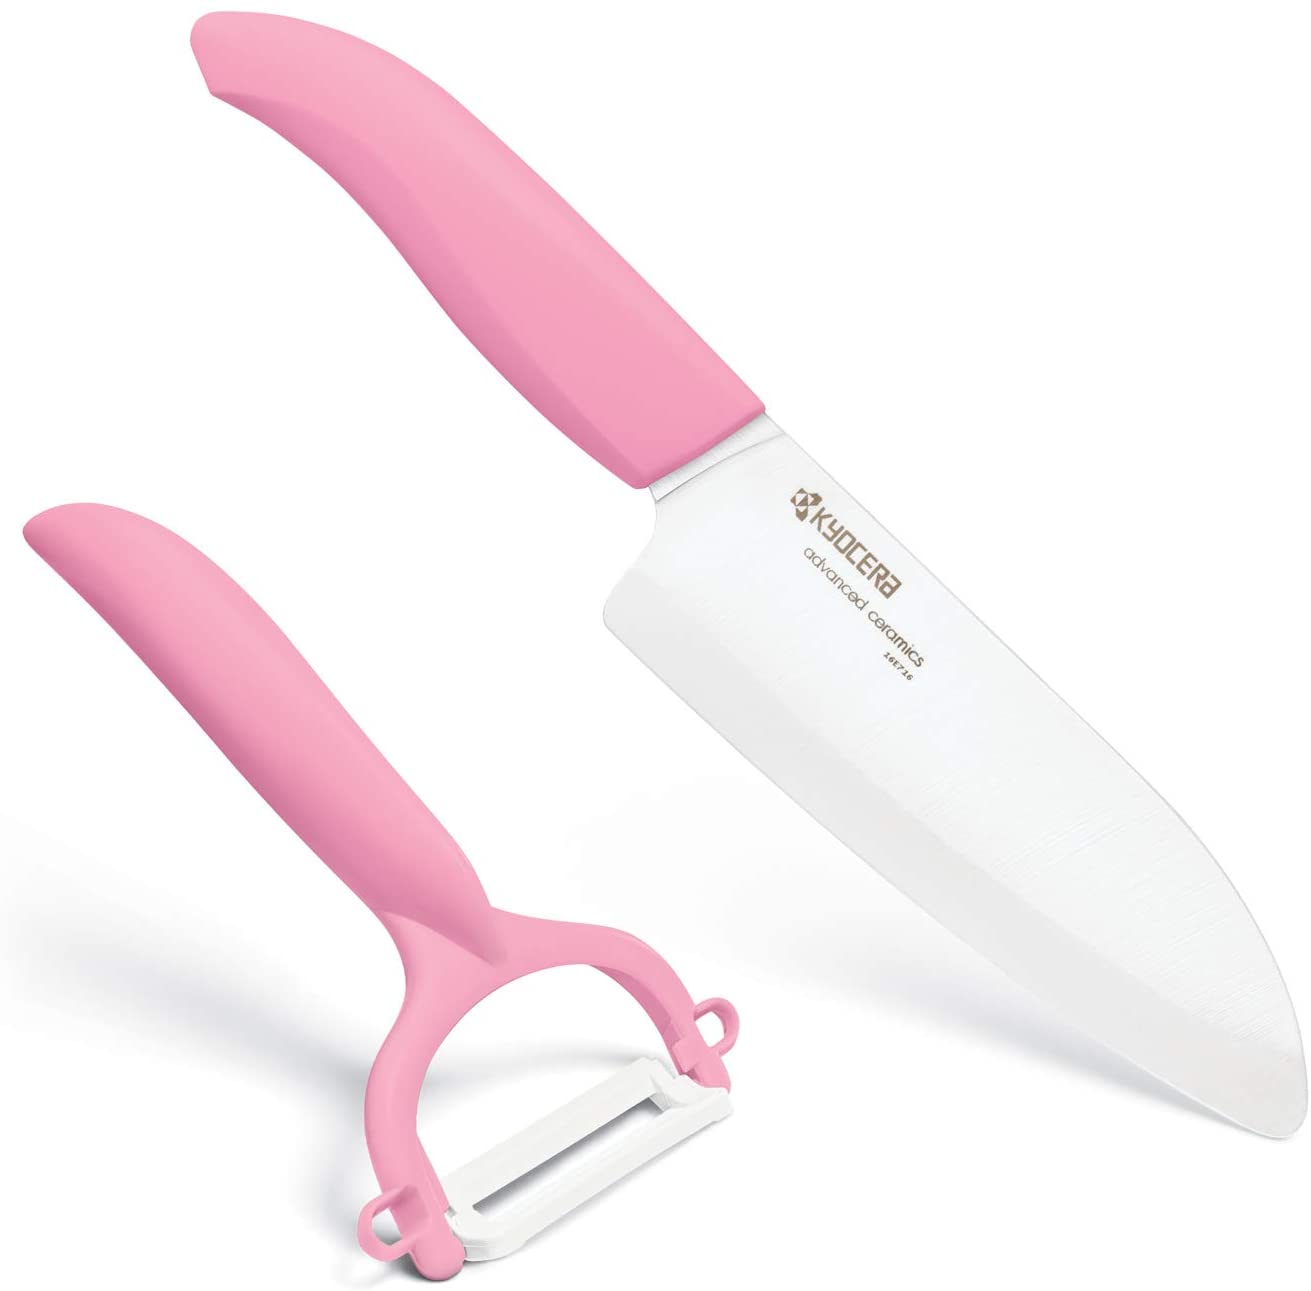 Kyocera Revolution Ceramic Kitchen Knife and Peeler, 5.5 inch, Pink